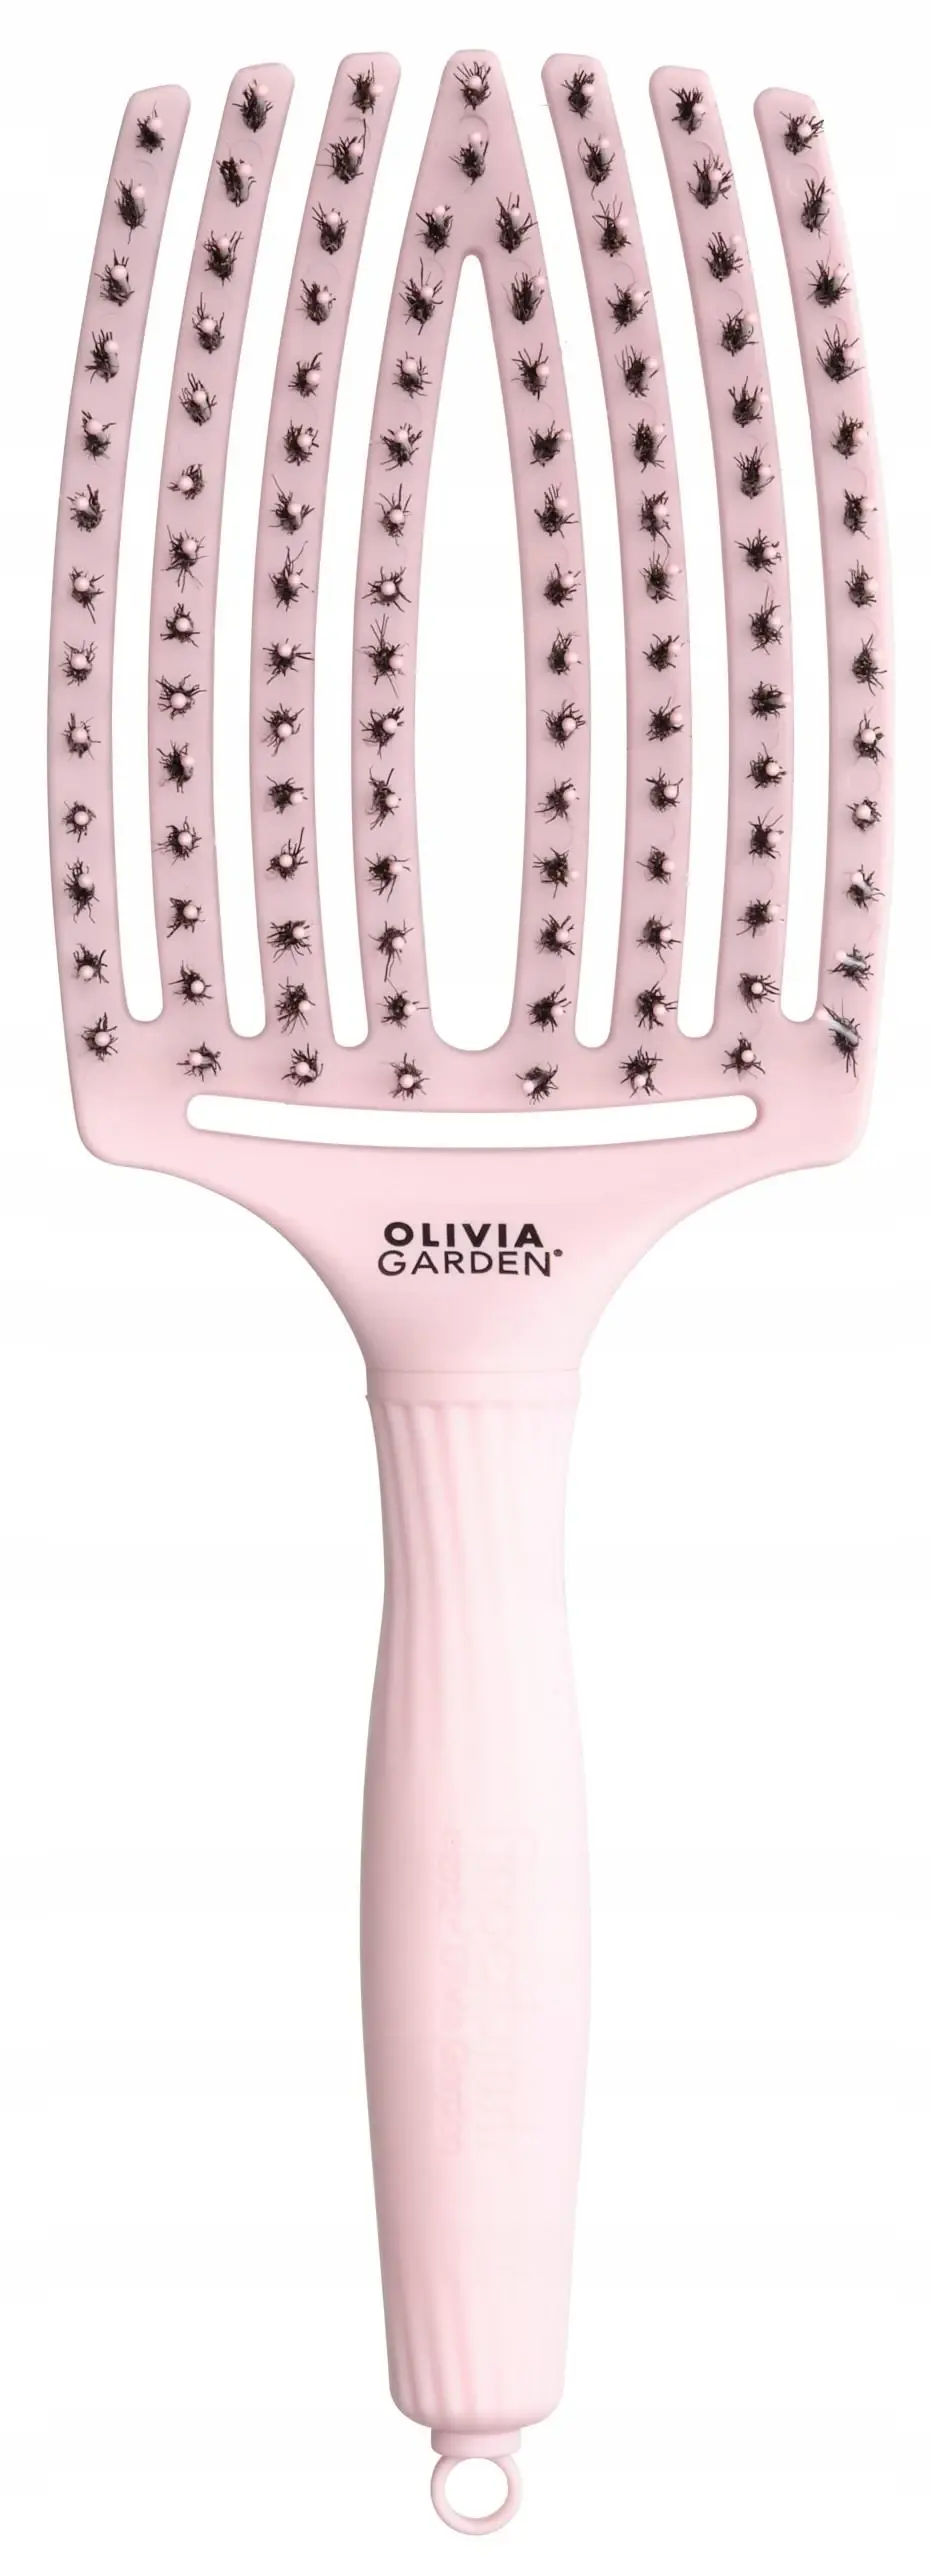 Olivia Garden - Fingerbrush Combo Pastel Large - Pink